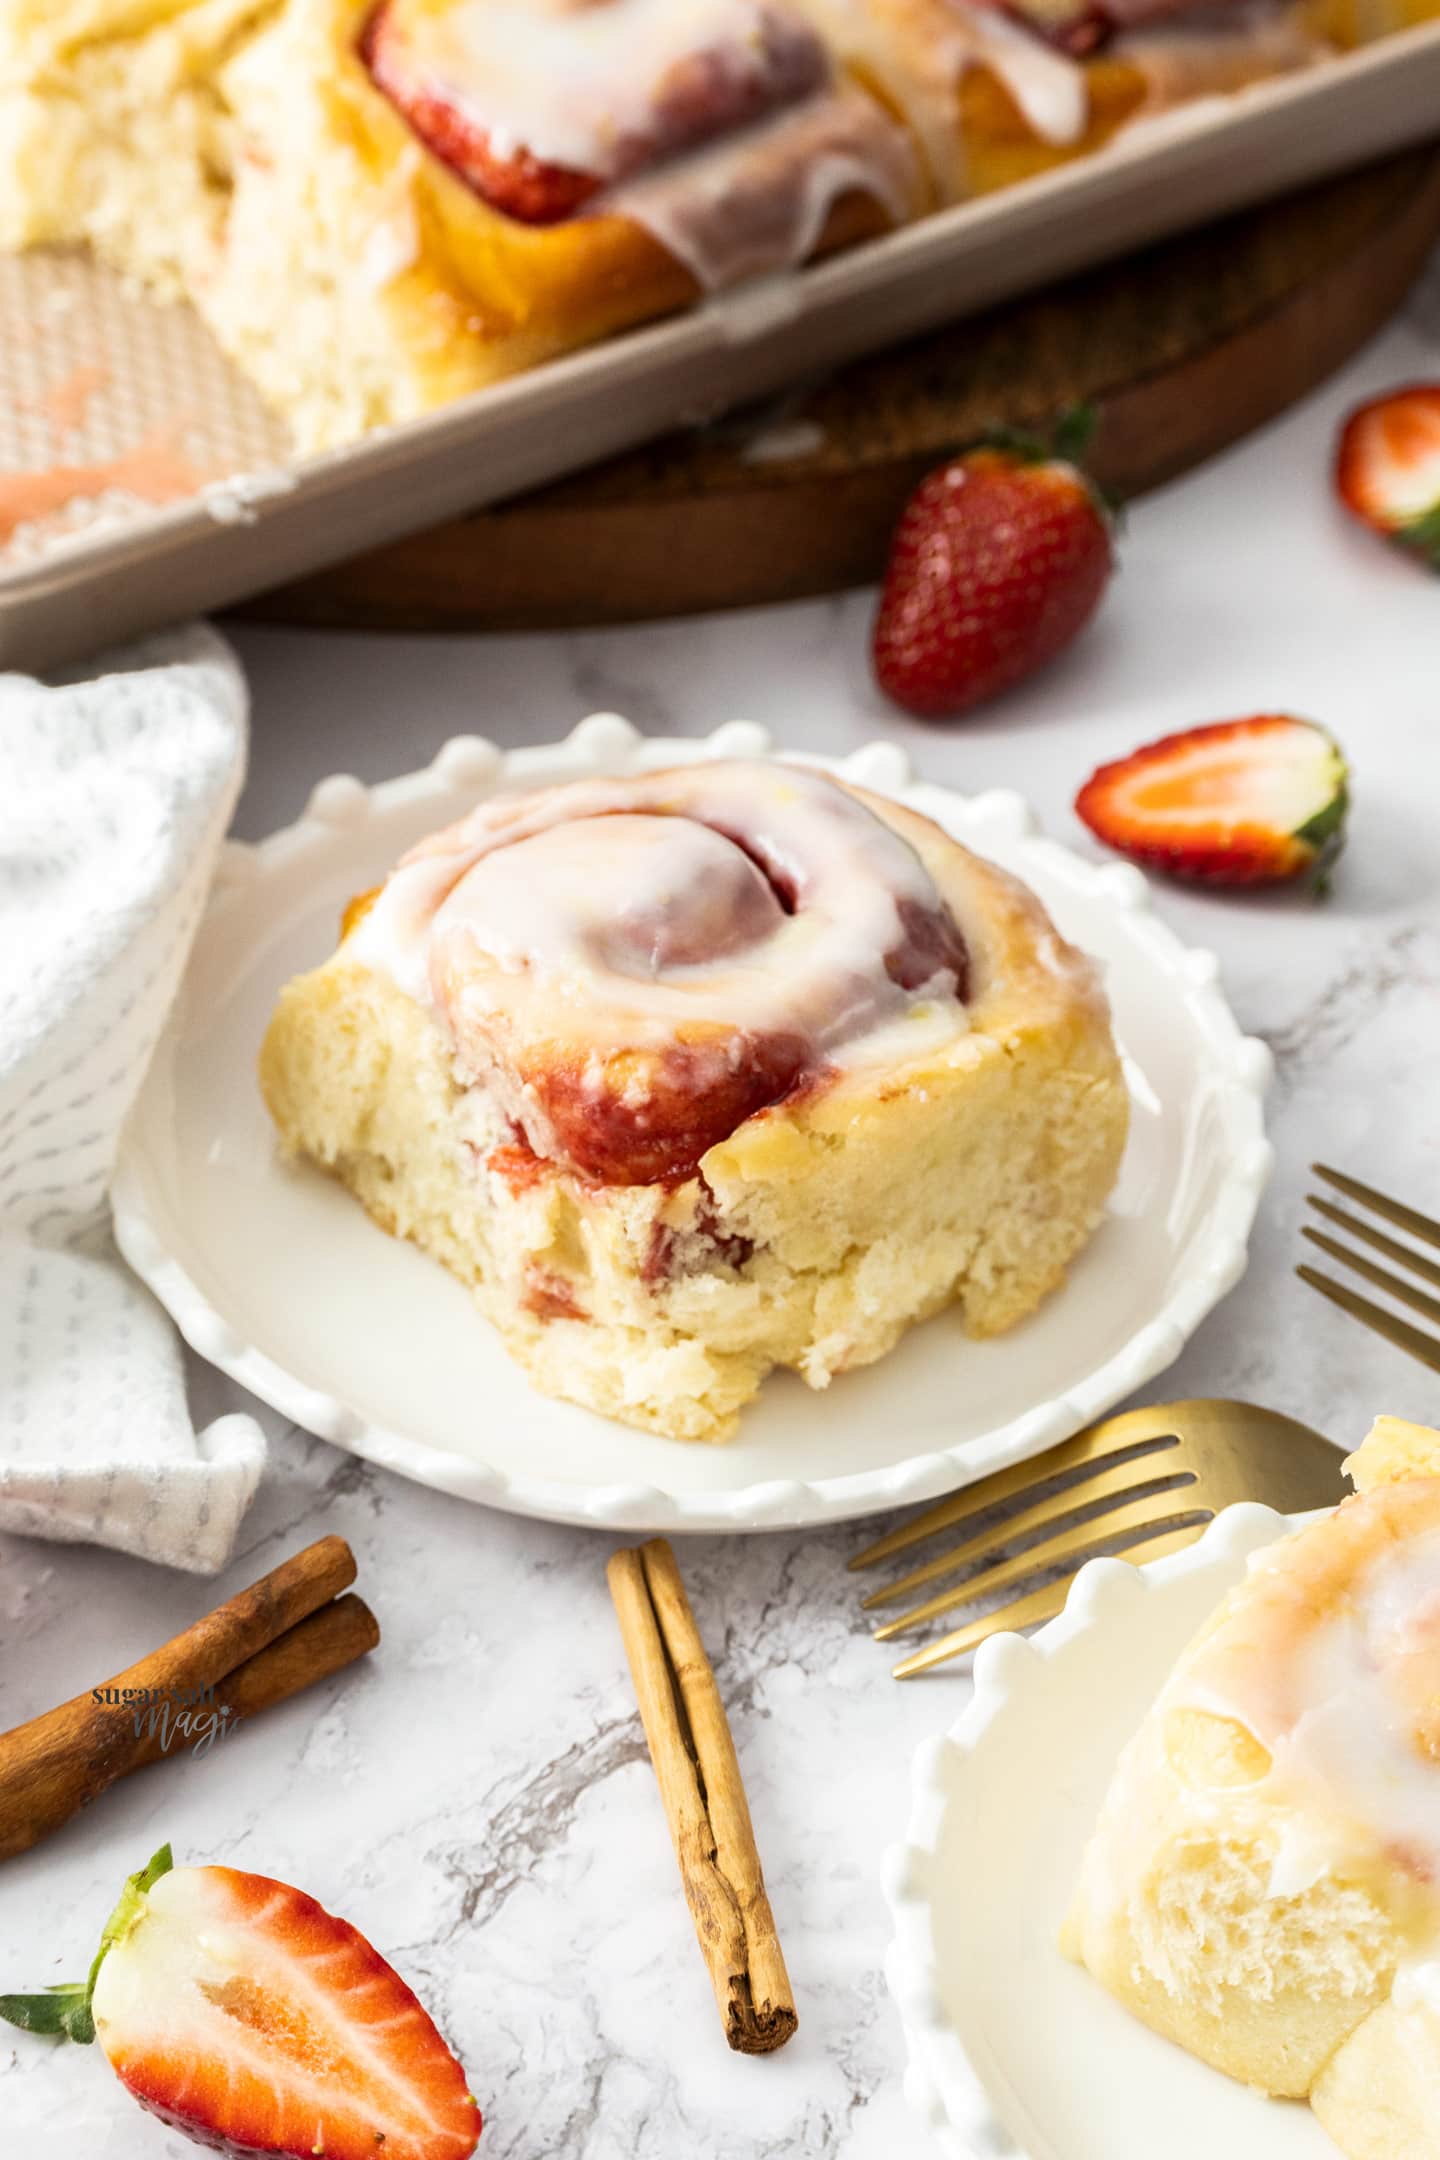 A strawberry cinnamon roll on a dessert plate.